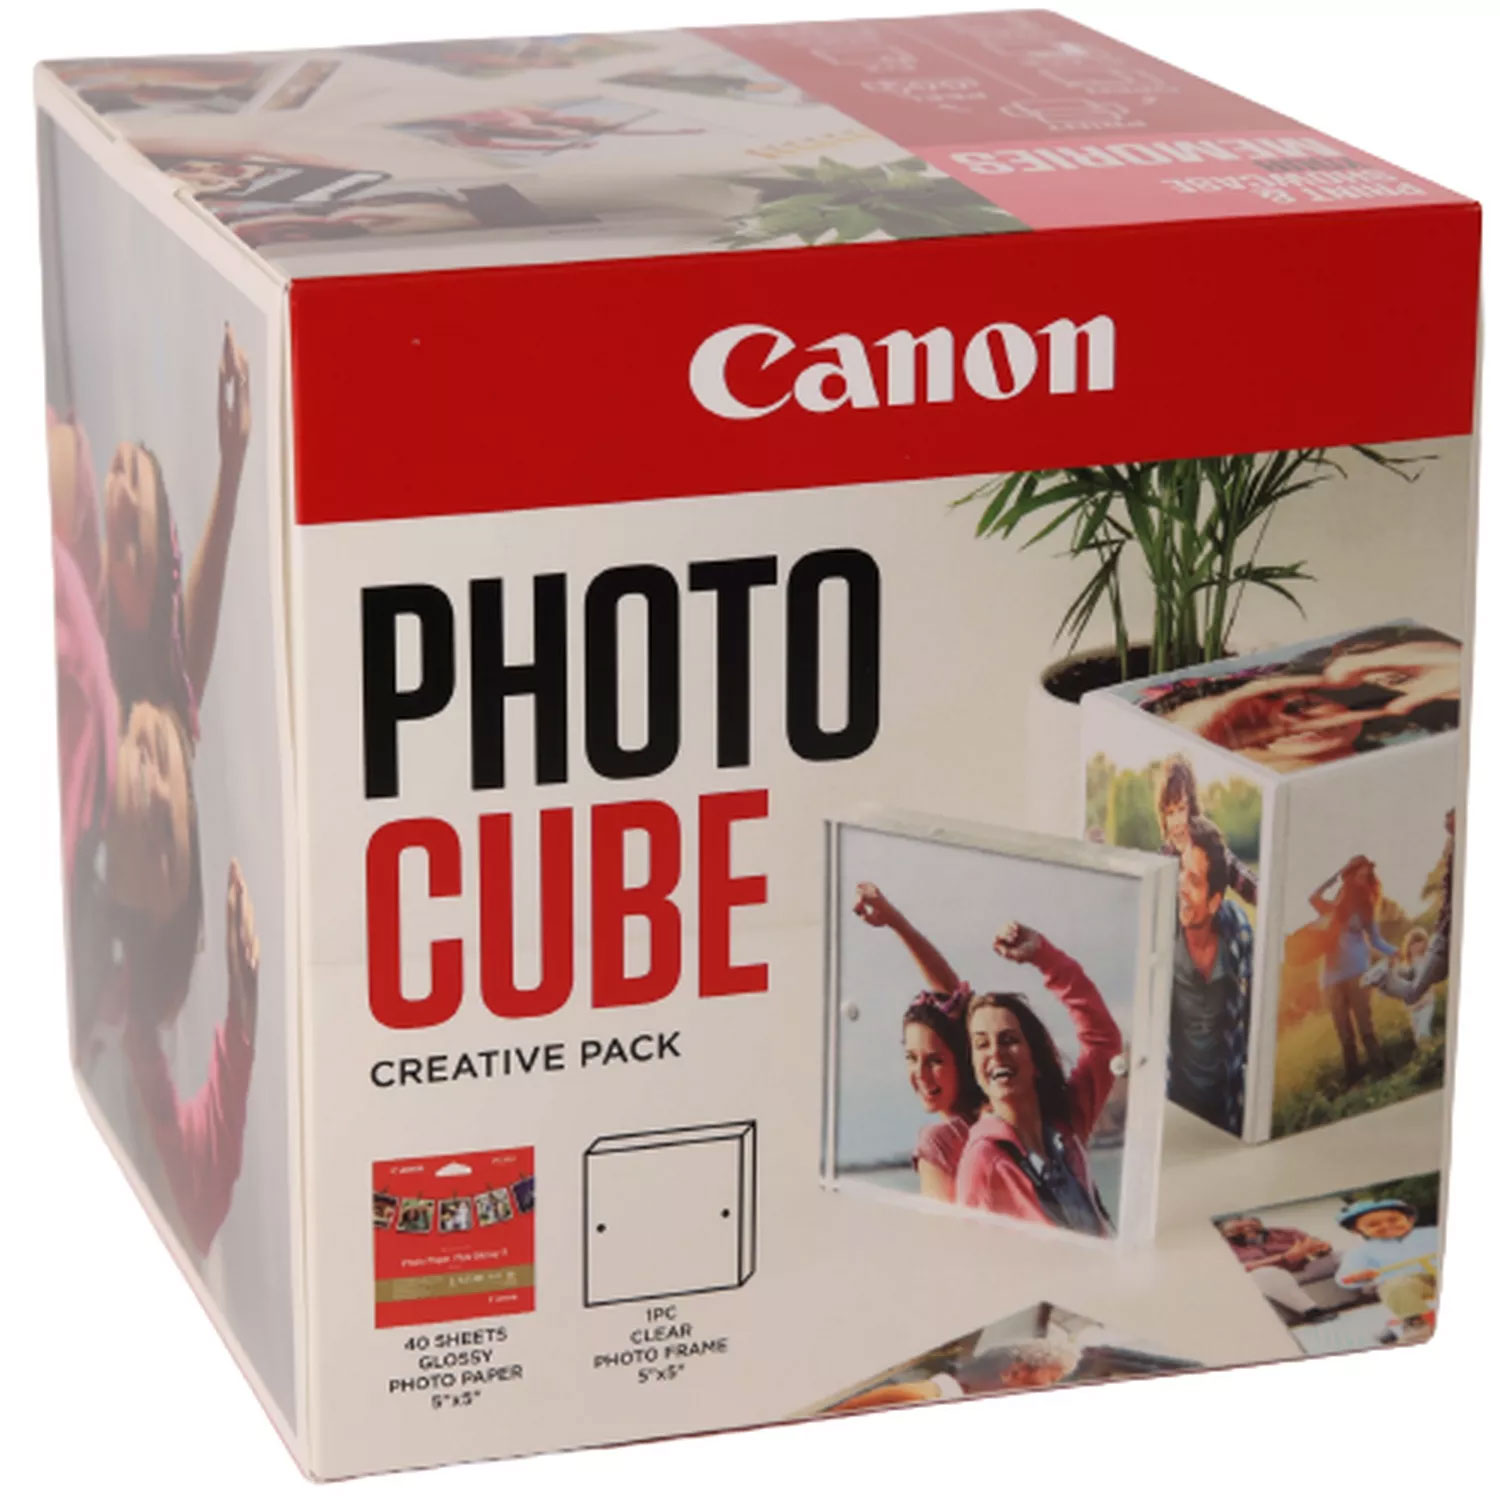 Original Canon PP-201 5X5 Photo Cube Creative Pack (2311B075)